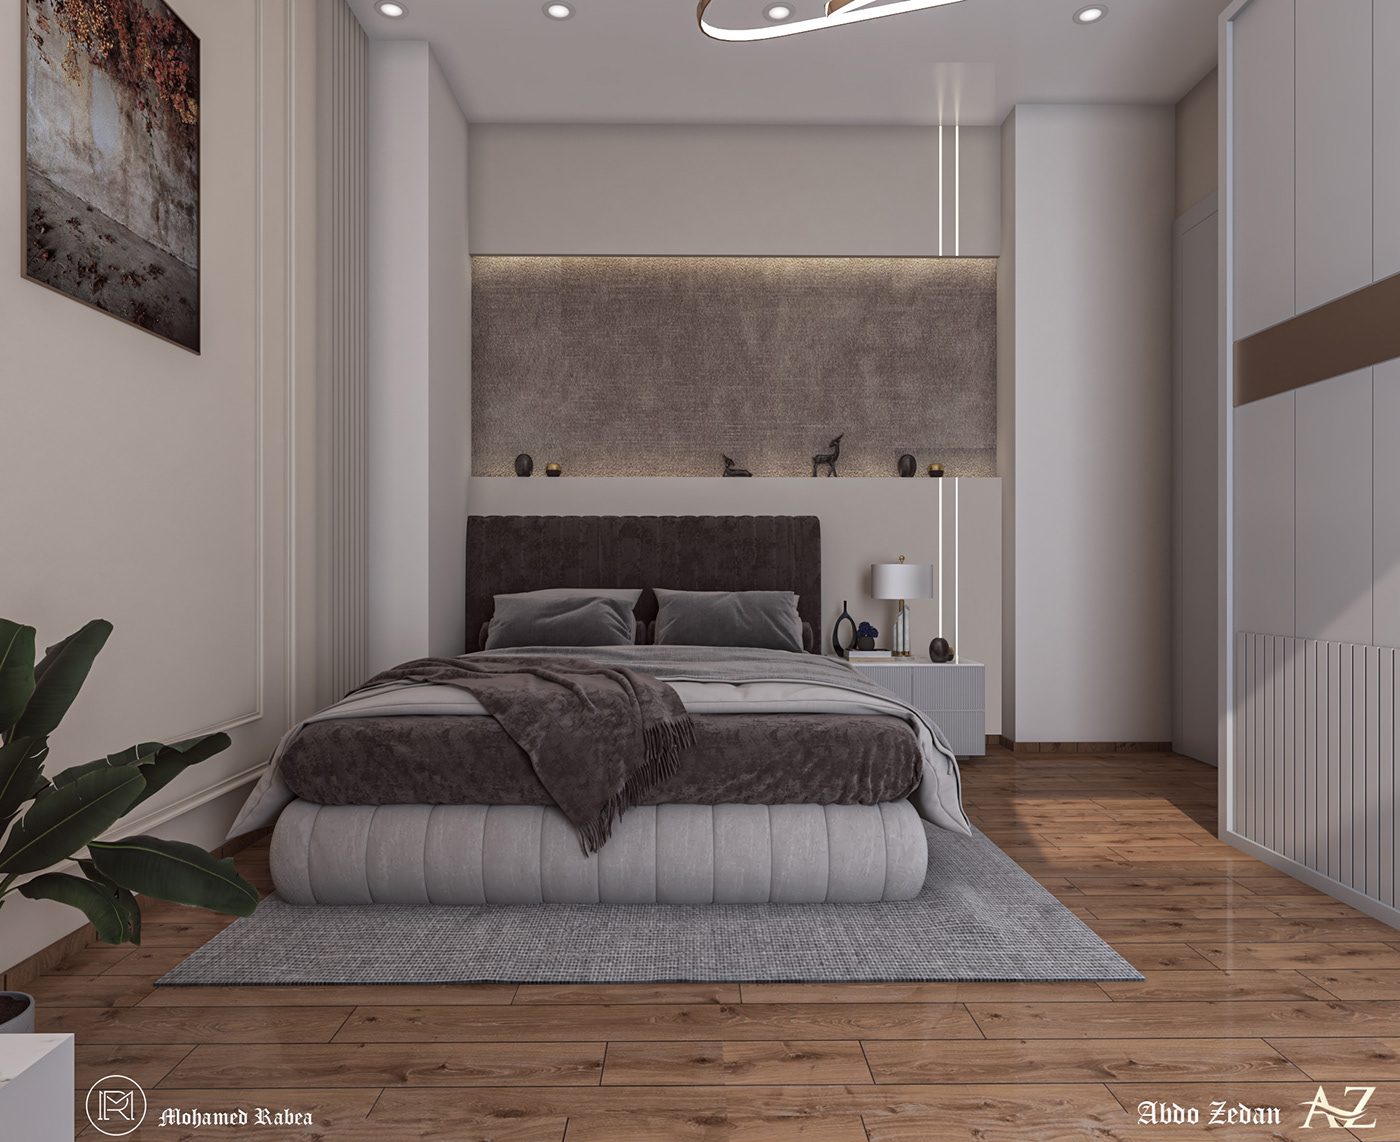 3ds max architecture bed interior design  Render vray